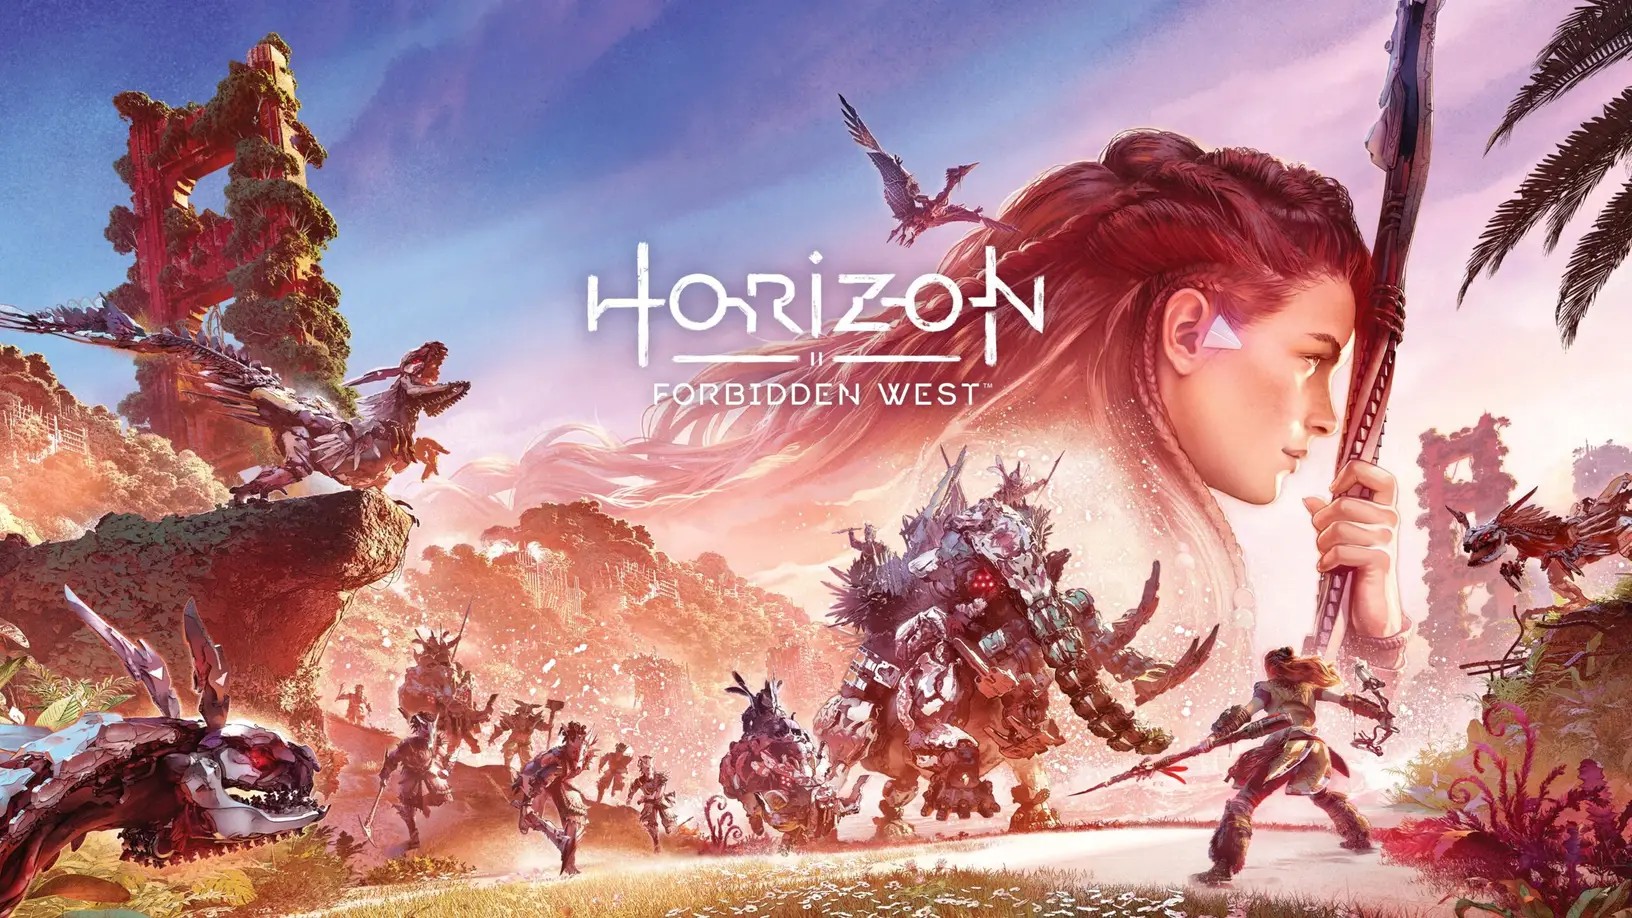 Horizon Zero Dawn Complete Edition Ps4 Mídia Física Pronto Entrega